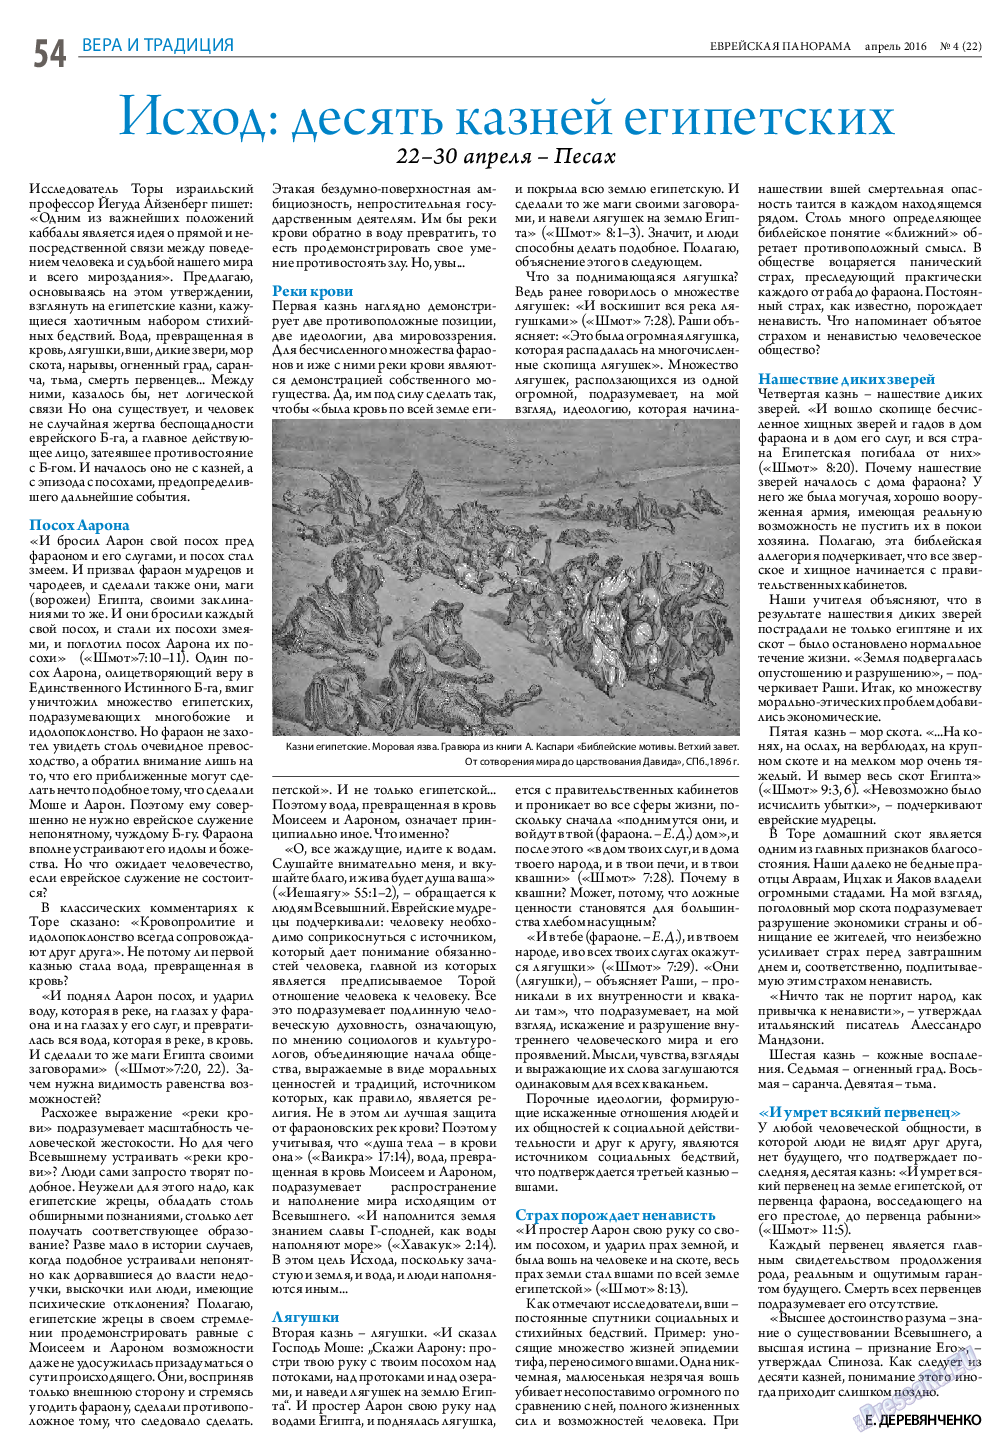 Еврейская панорама, газета. 2016 №4 стр.54